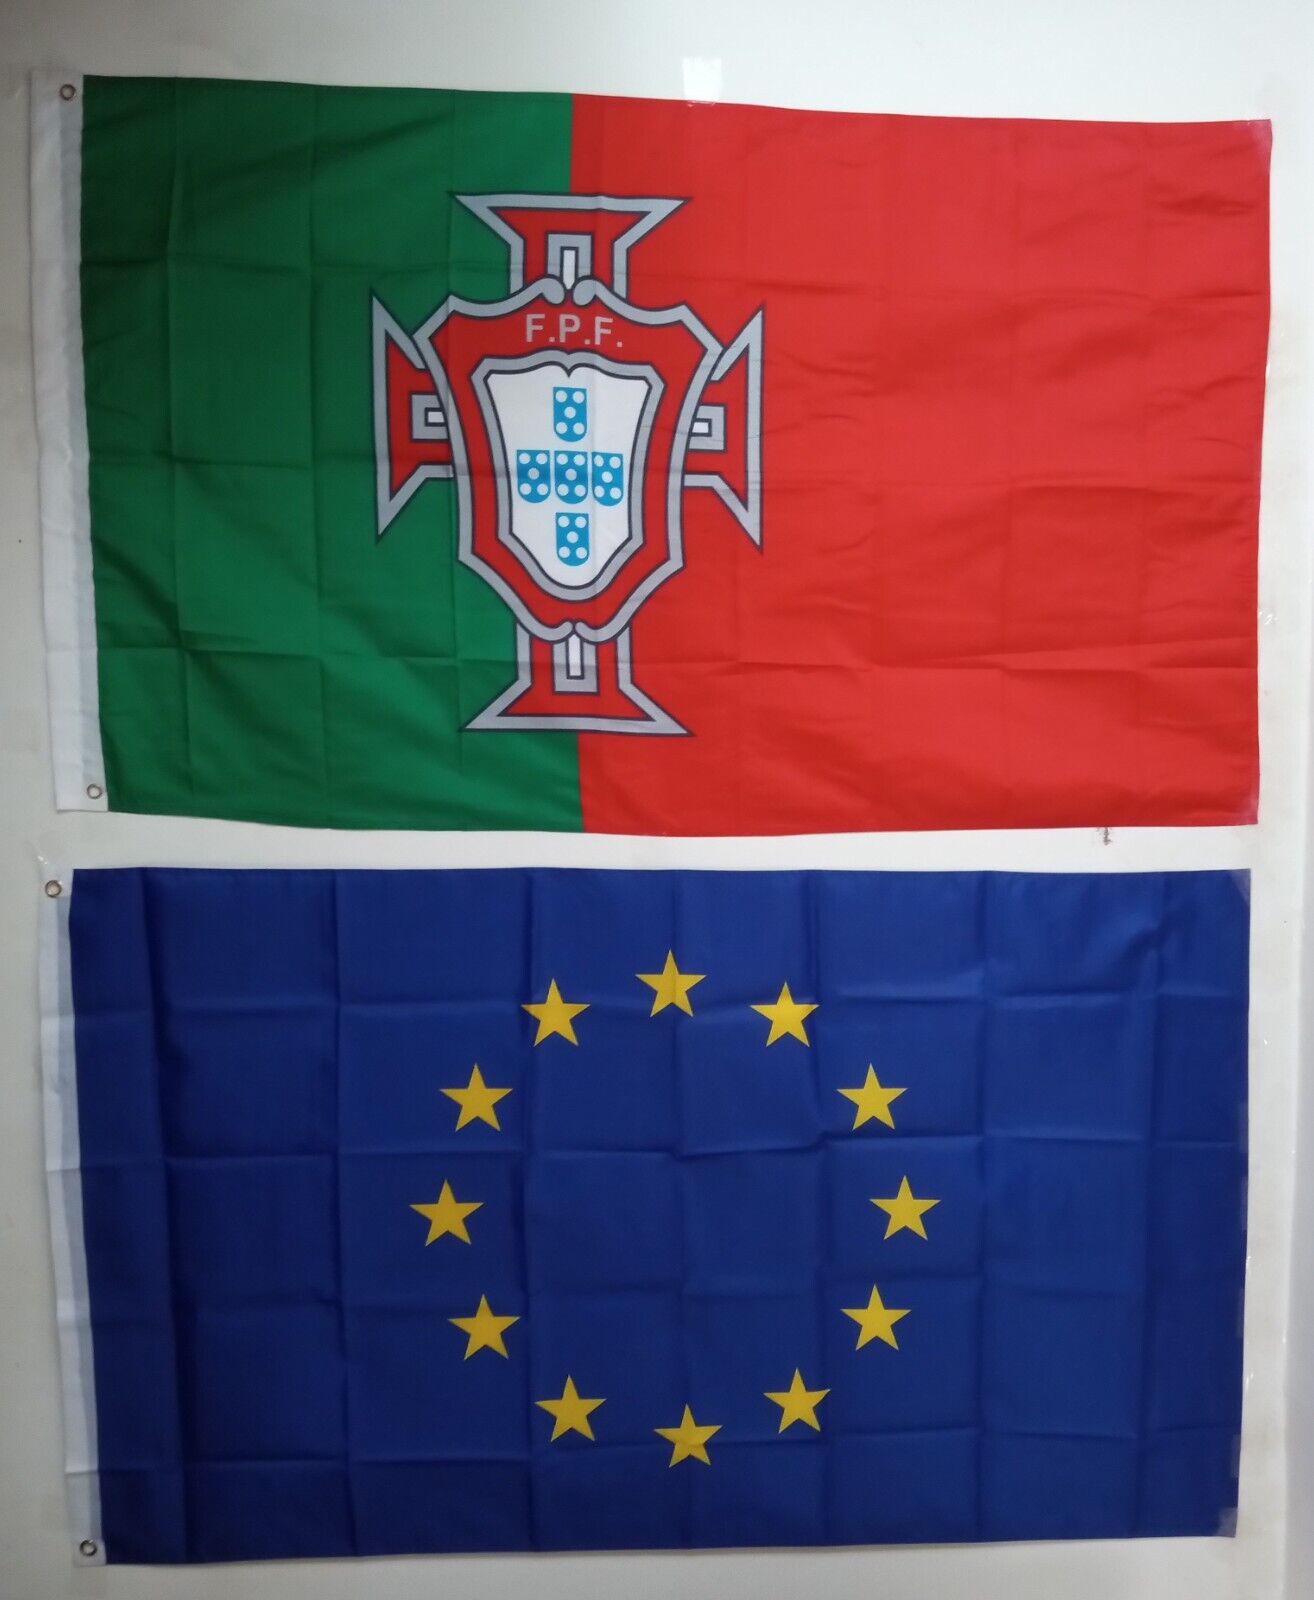 1 PORTUGAL FEDERATION FLAG (3x5 FT) + 1 EUROPEAN COMMUNITY FLAG (3X5 FT) $35